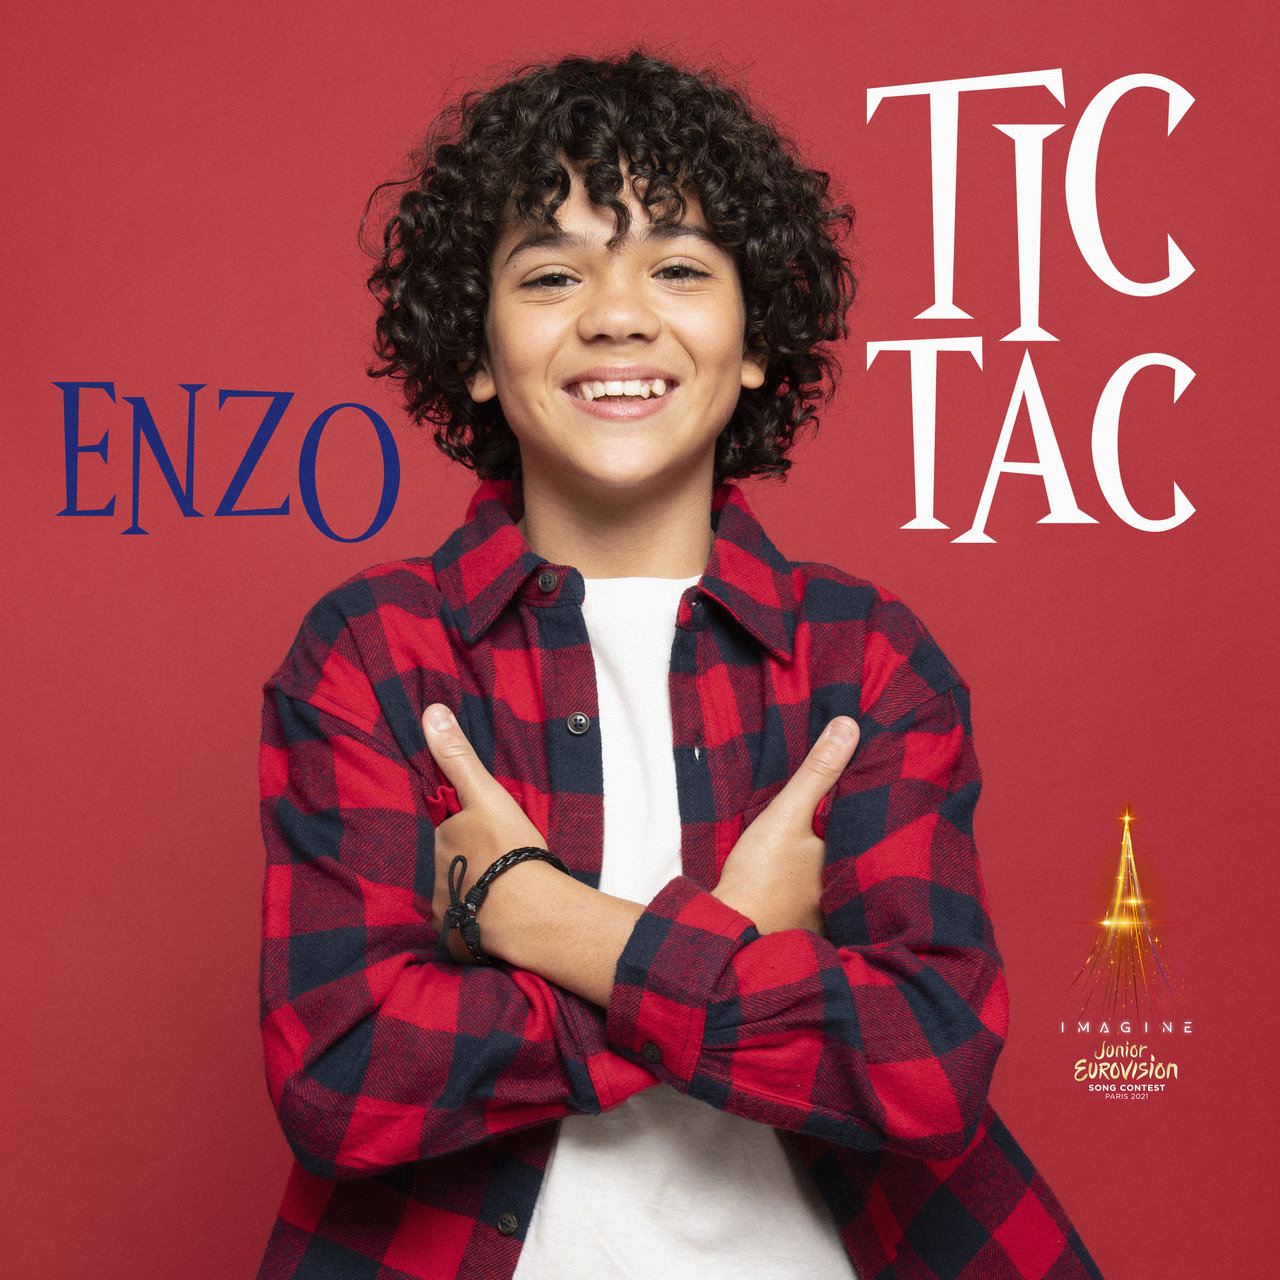 Enzo Tic Tac cover artwork